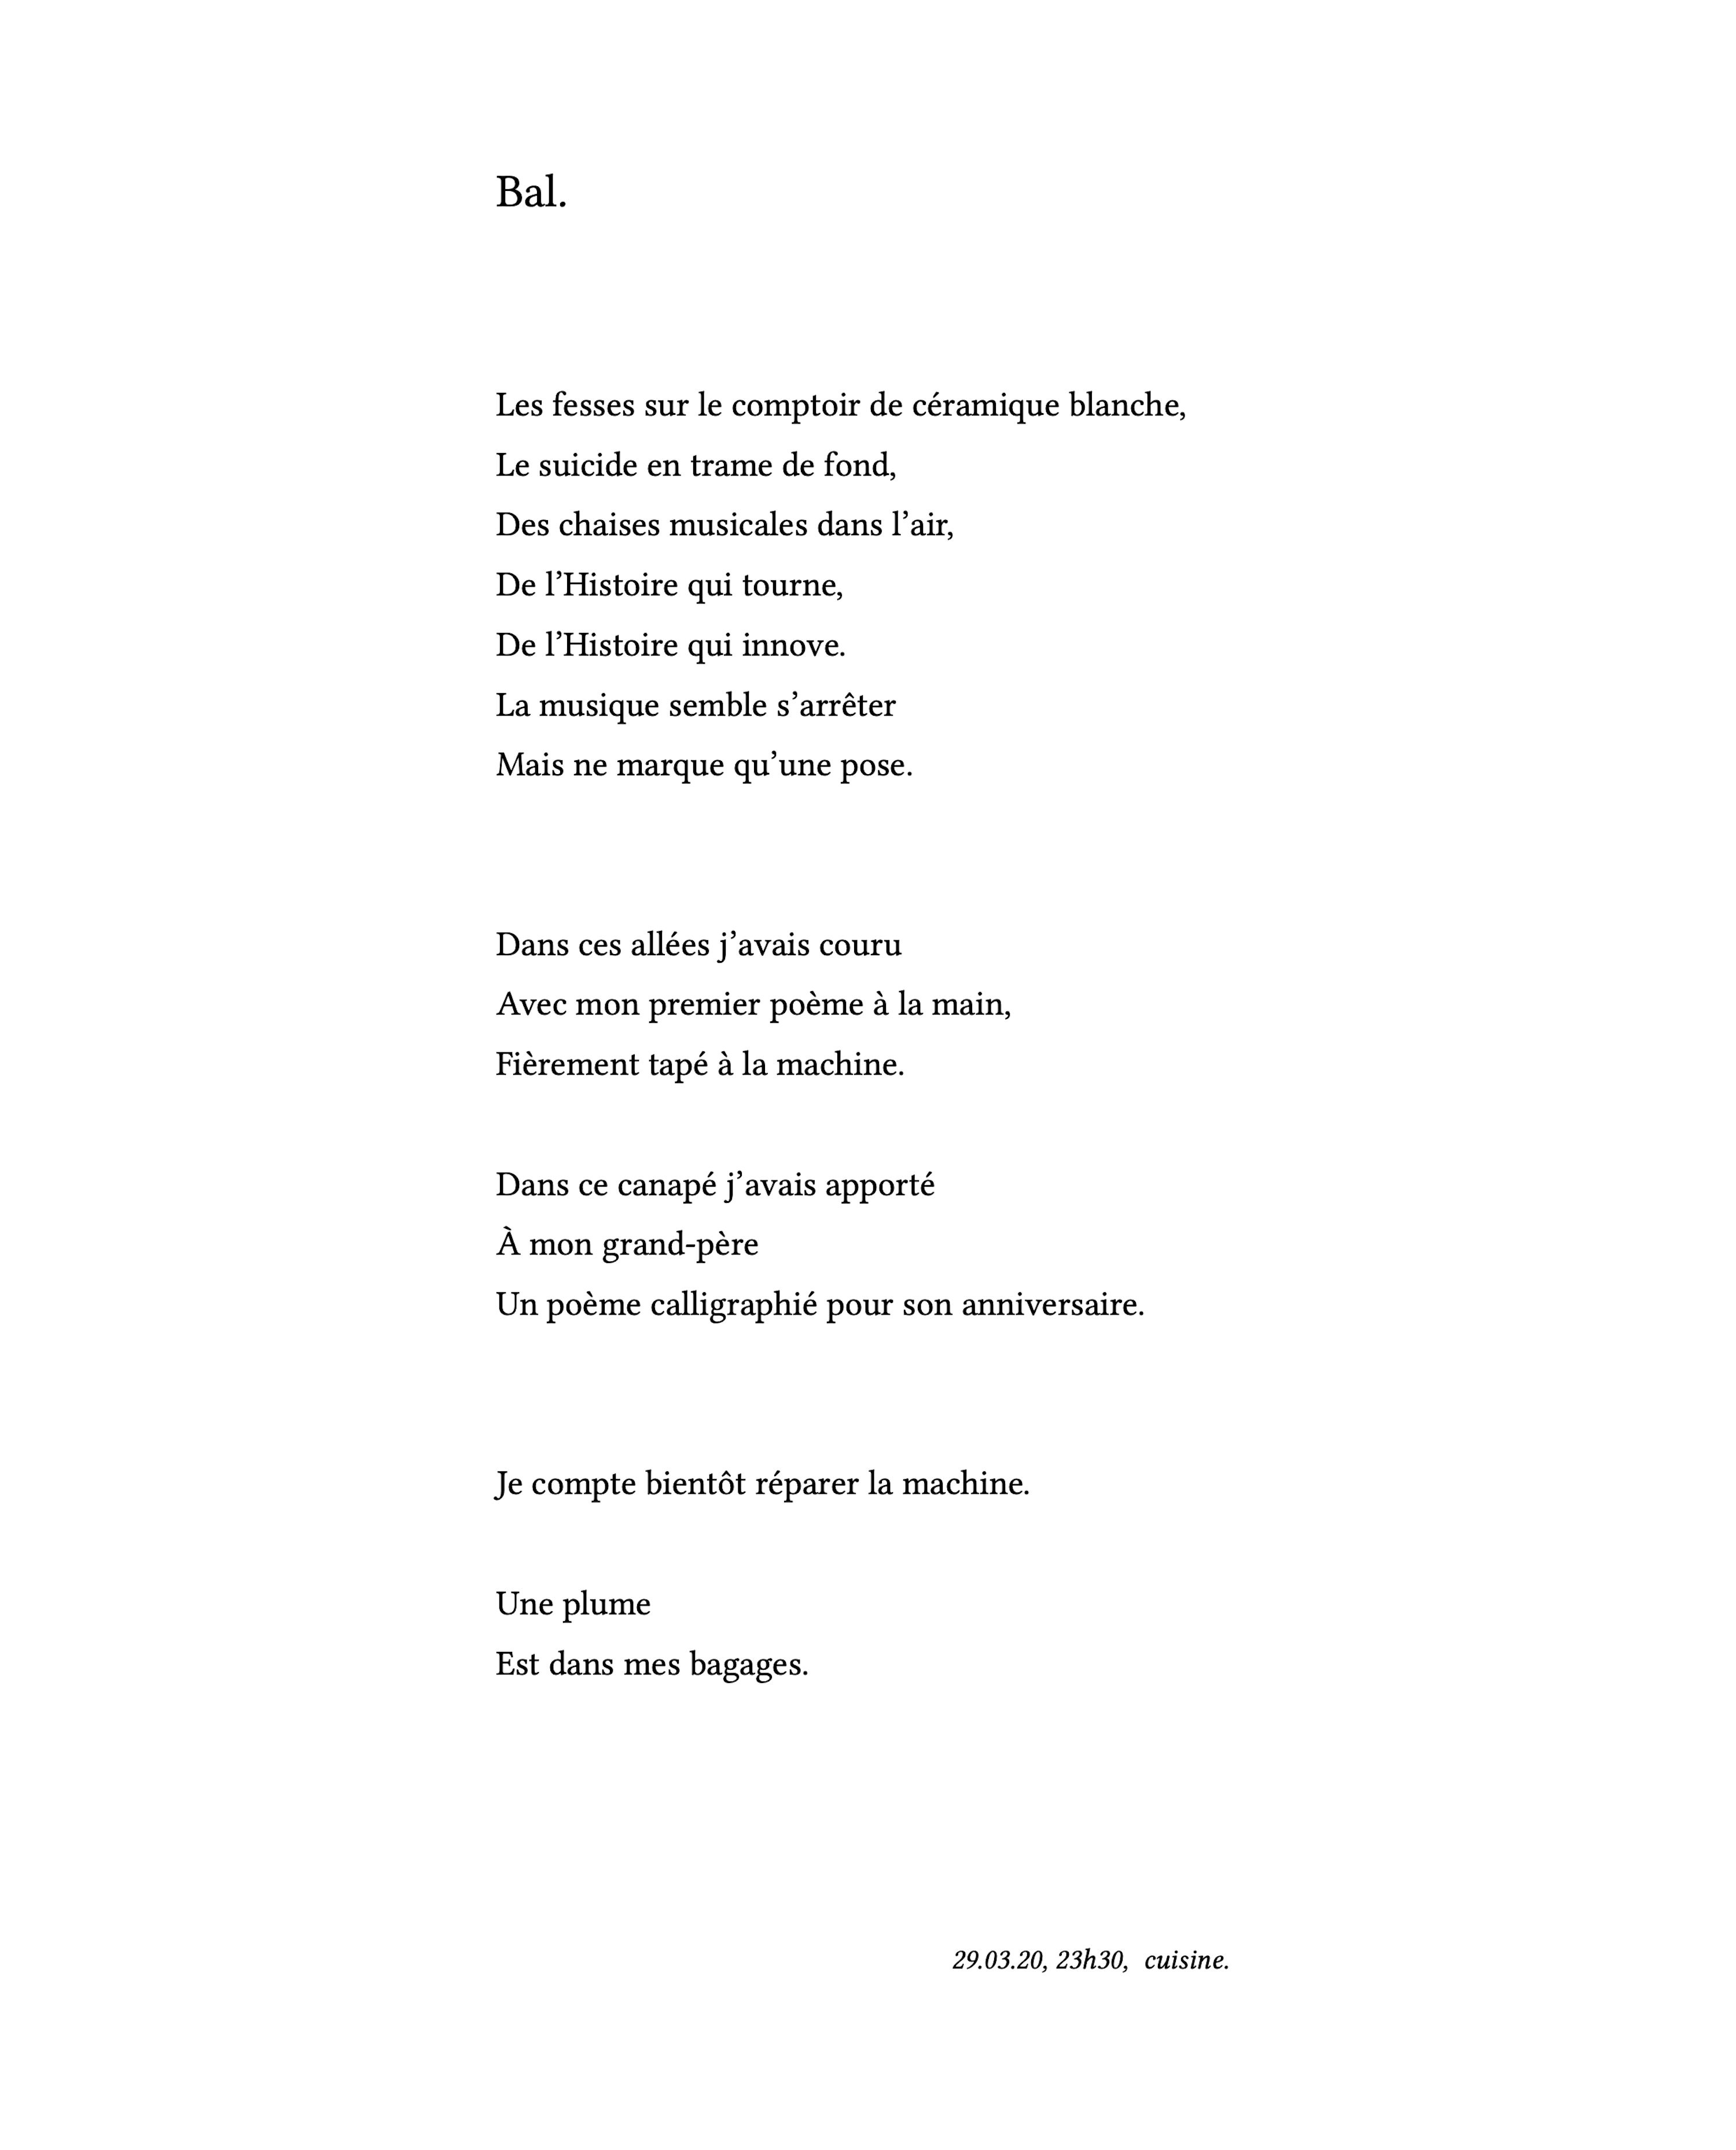 poem: Bal